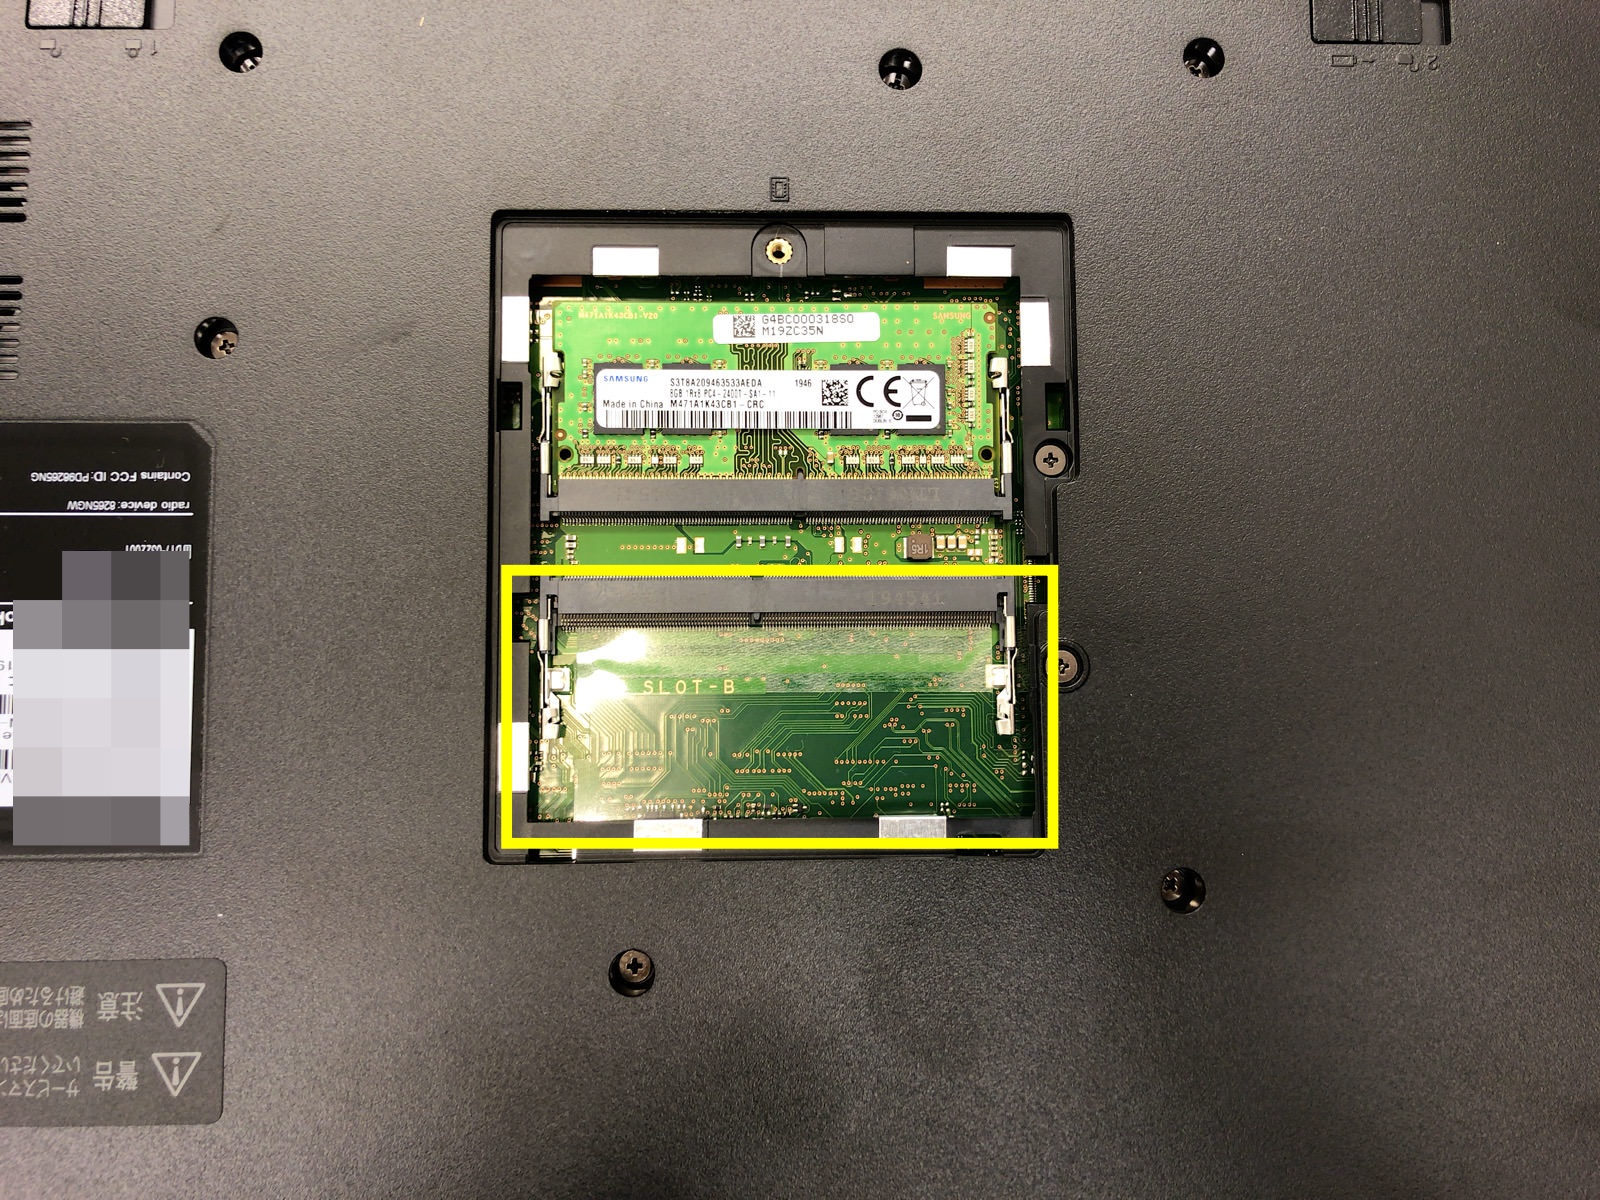 dynabook B65のSSD換装とメモリ増設【高速化】 | Naosuyo Blog